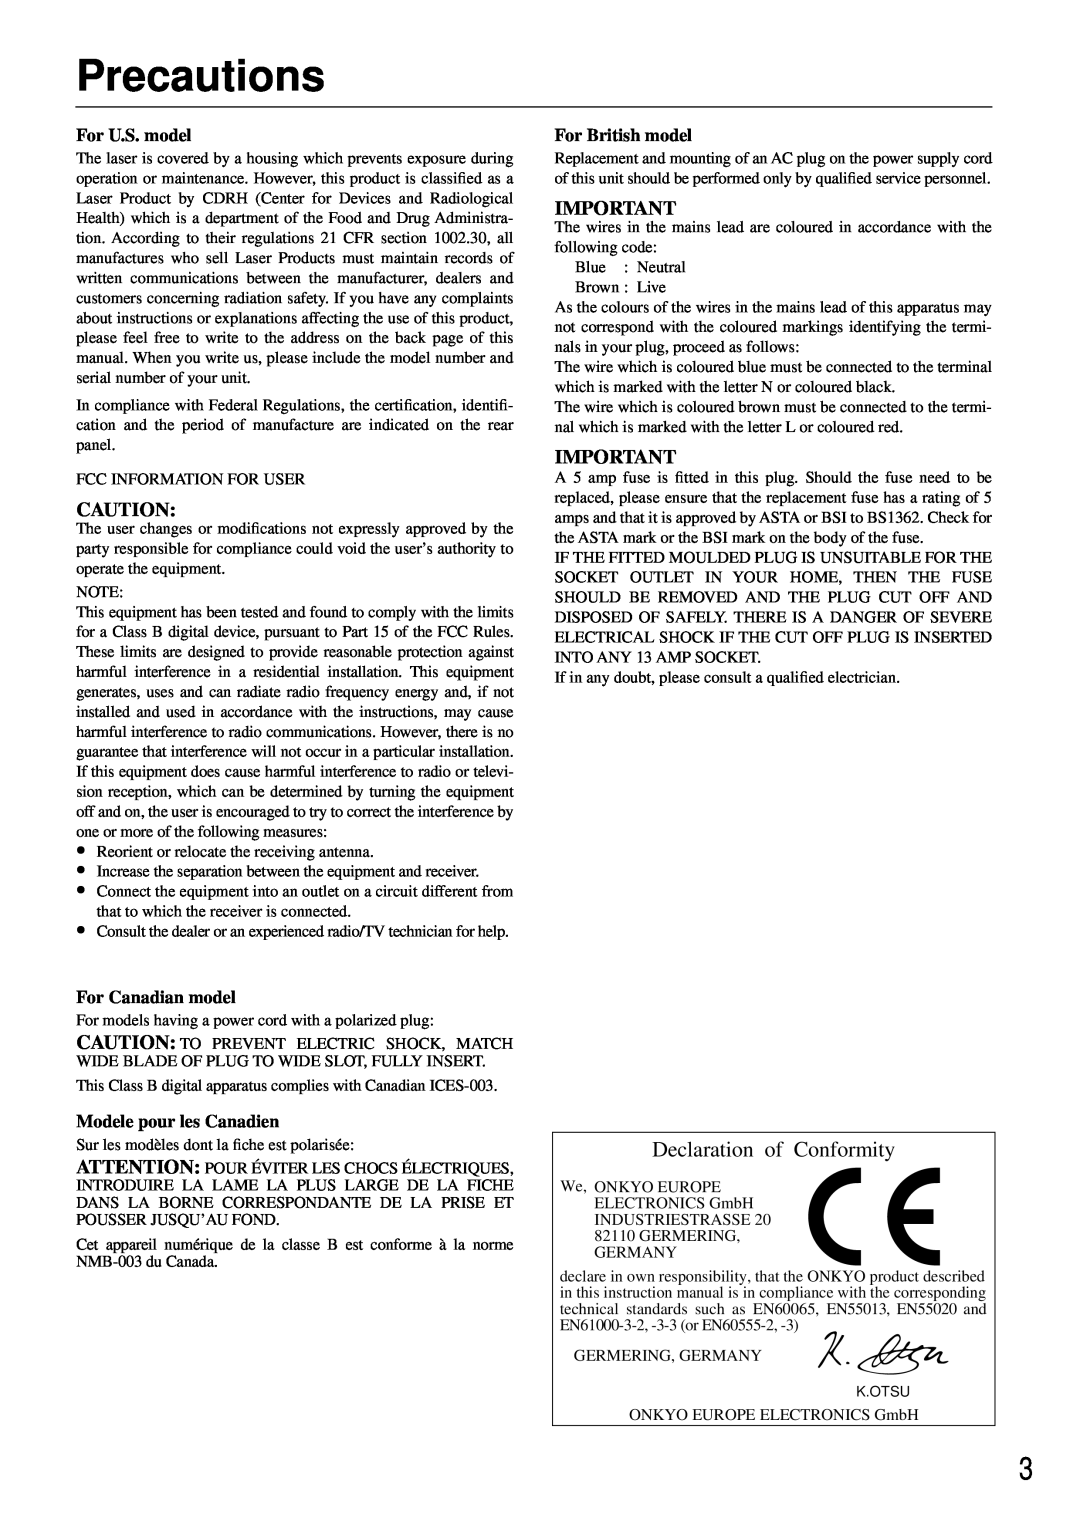 Onkyo DX-C380 instruction manual Precautions, Declaration of Conformity 